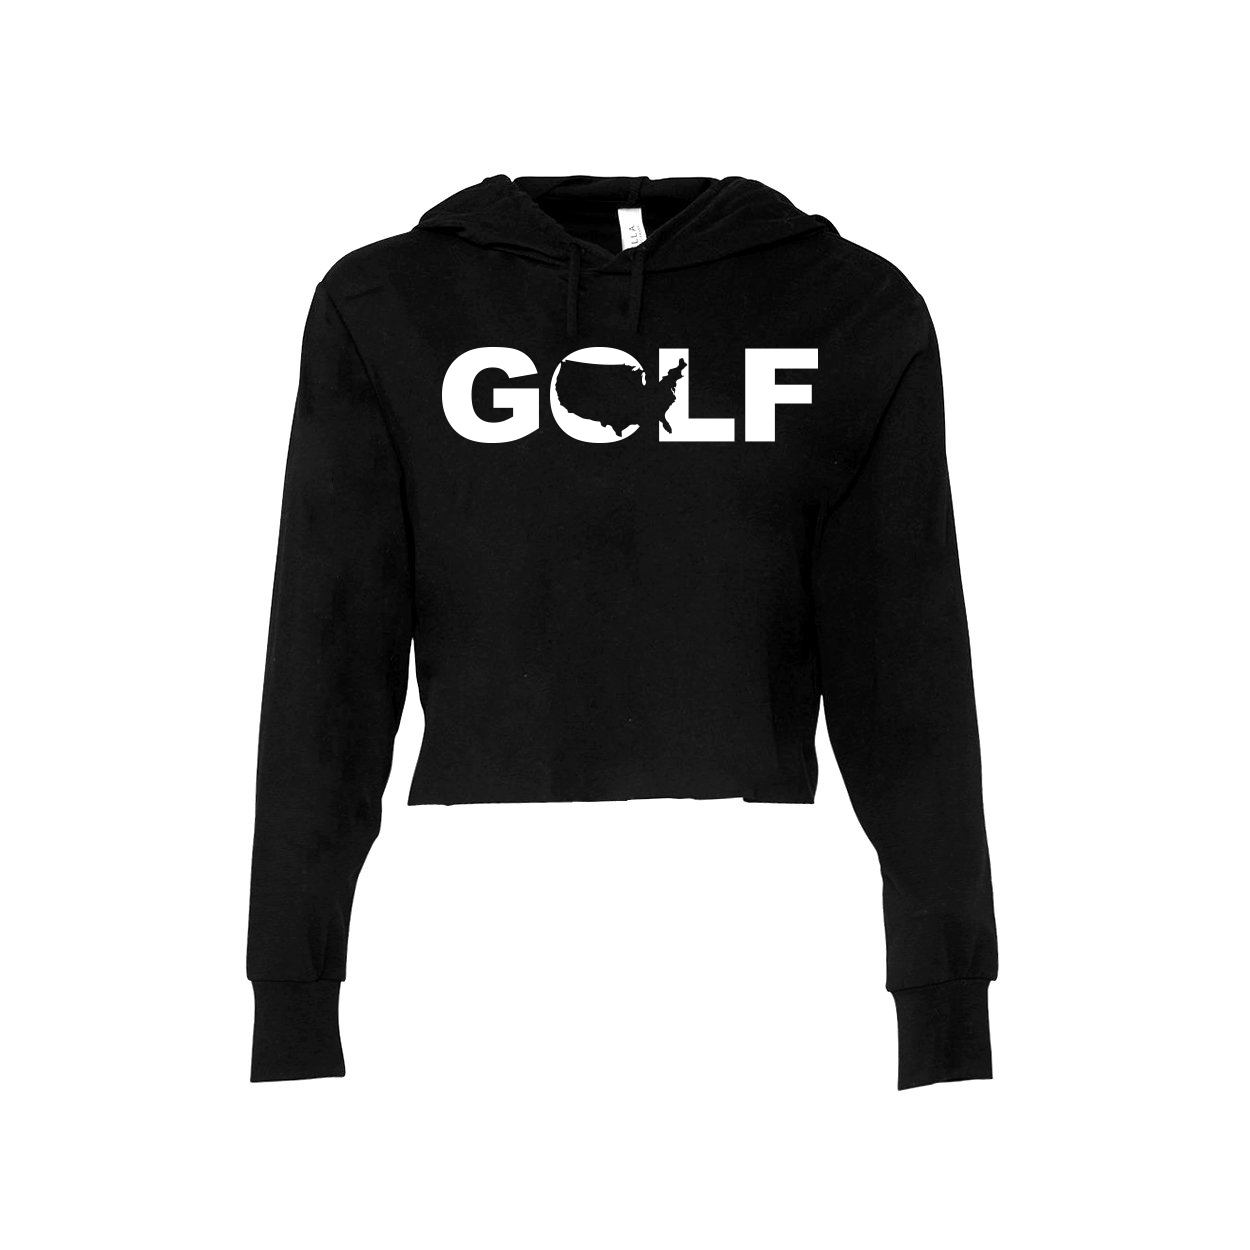 Golf United States Classic Womens Cropped Sweatshirt Black (White Logo)